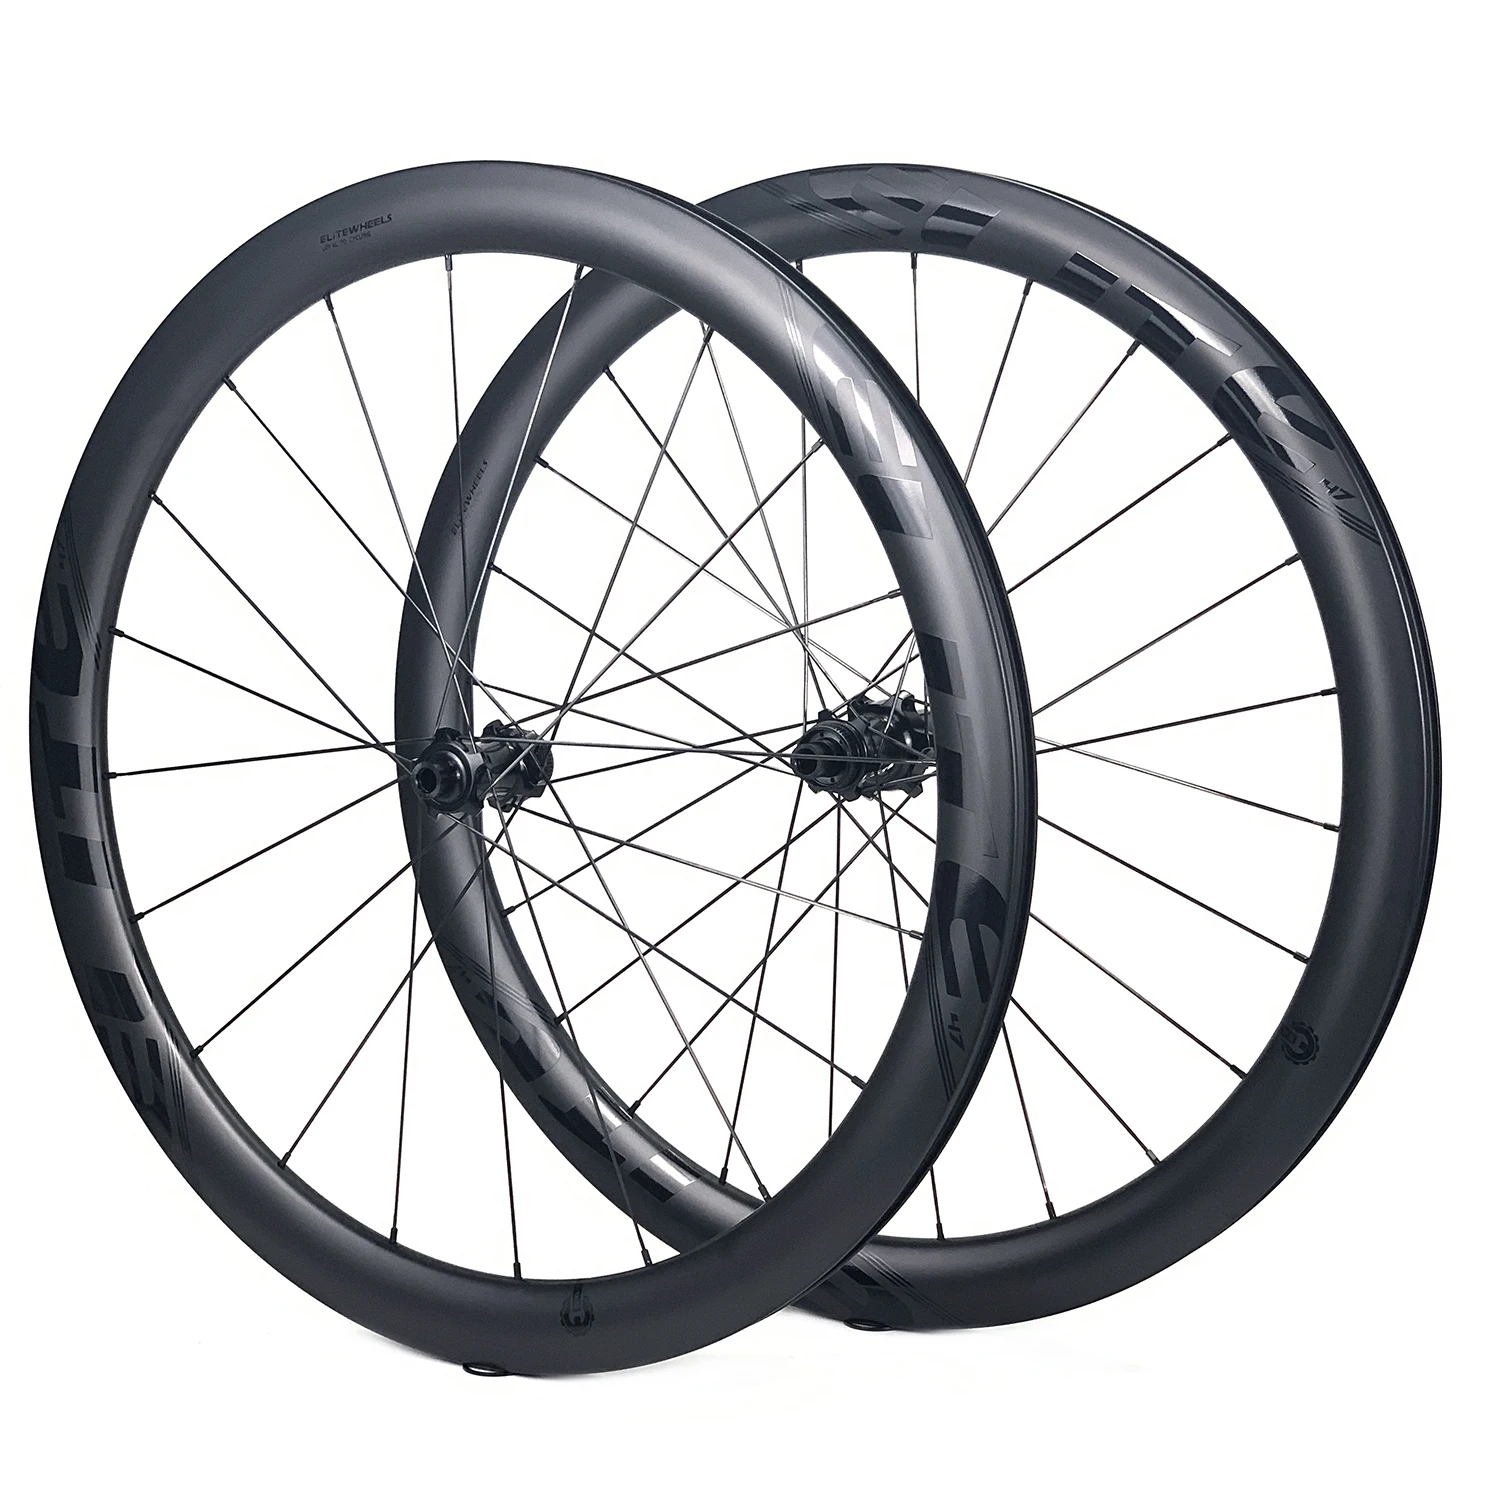 

ELITEWHEELS SLR Carbon Disc Brake Road Bike Wheels RD14 Ratchet System 36T 700c Cyclocross Wheels